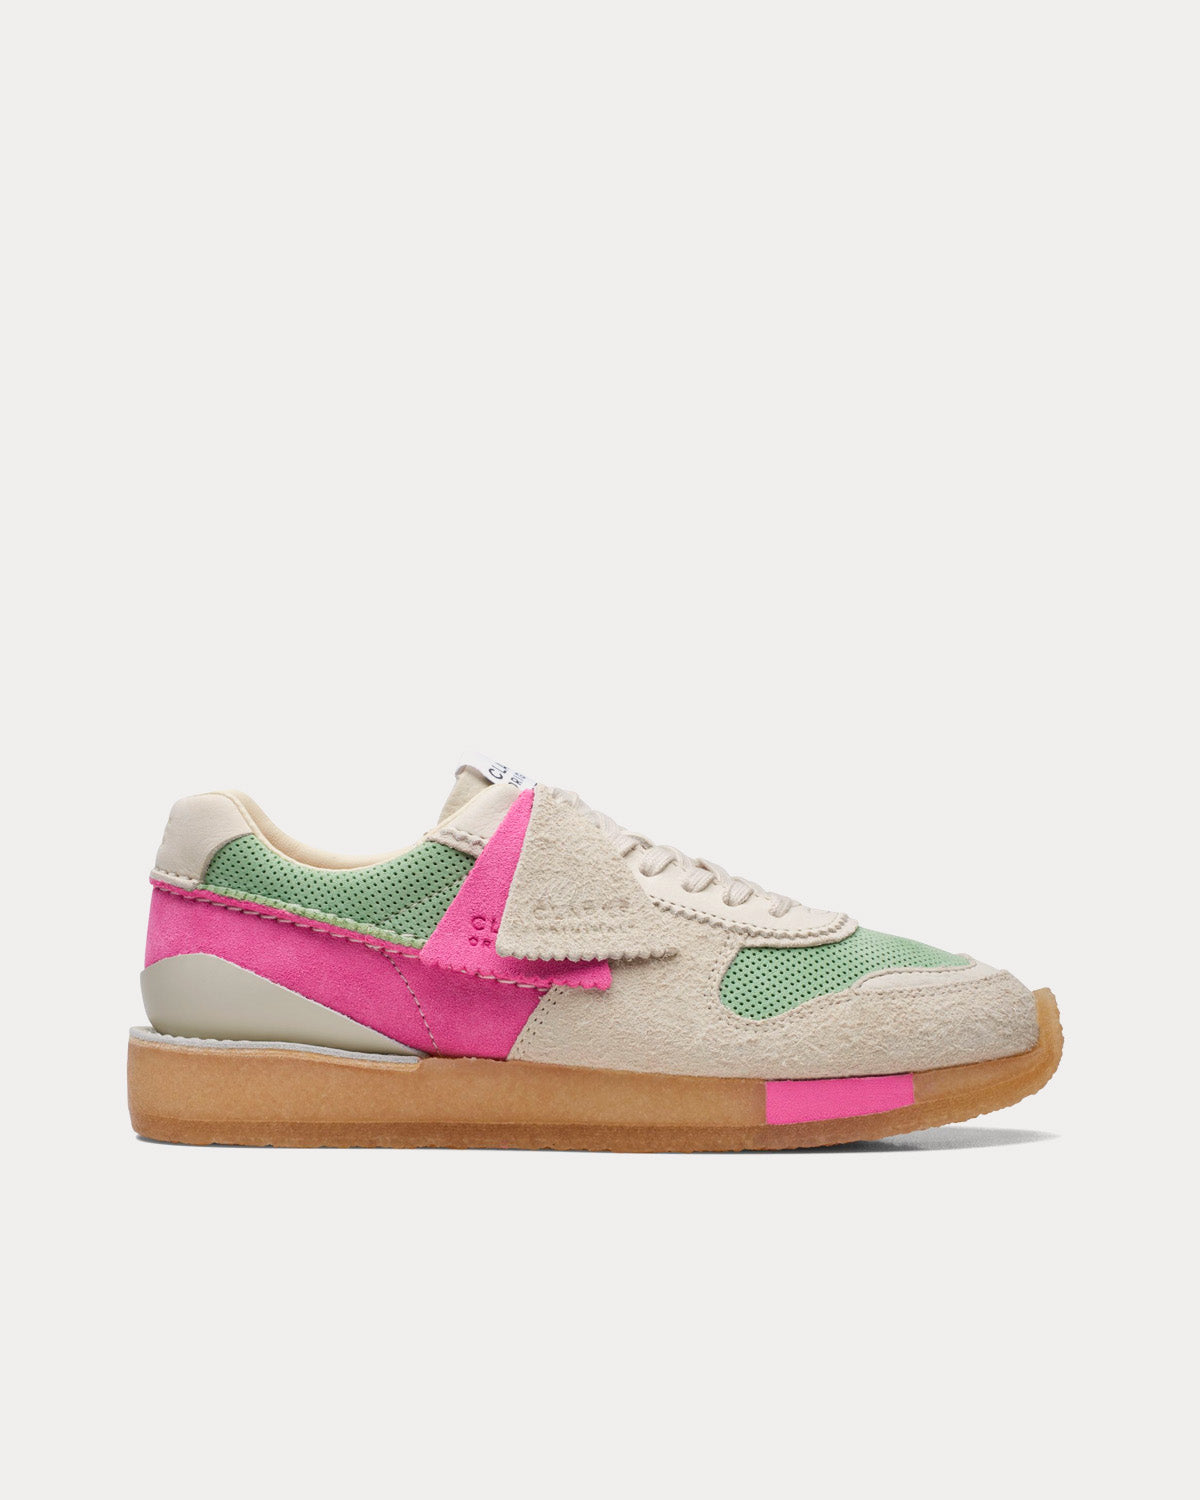 Clarks - Tor Run Pink / Green Combi Low Top Sneakers